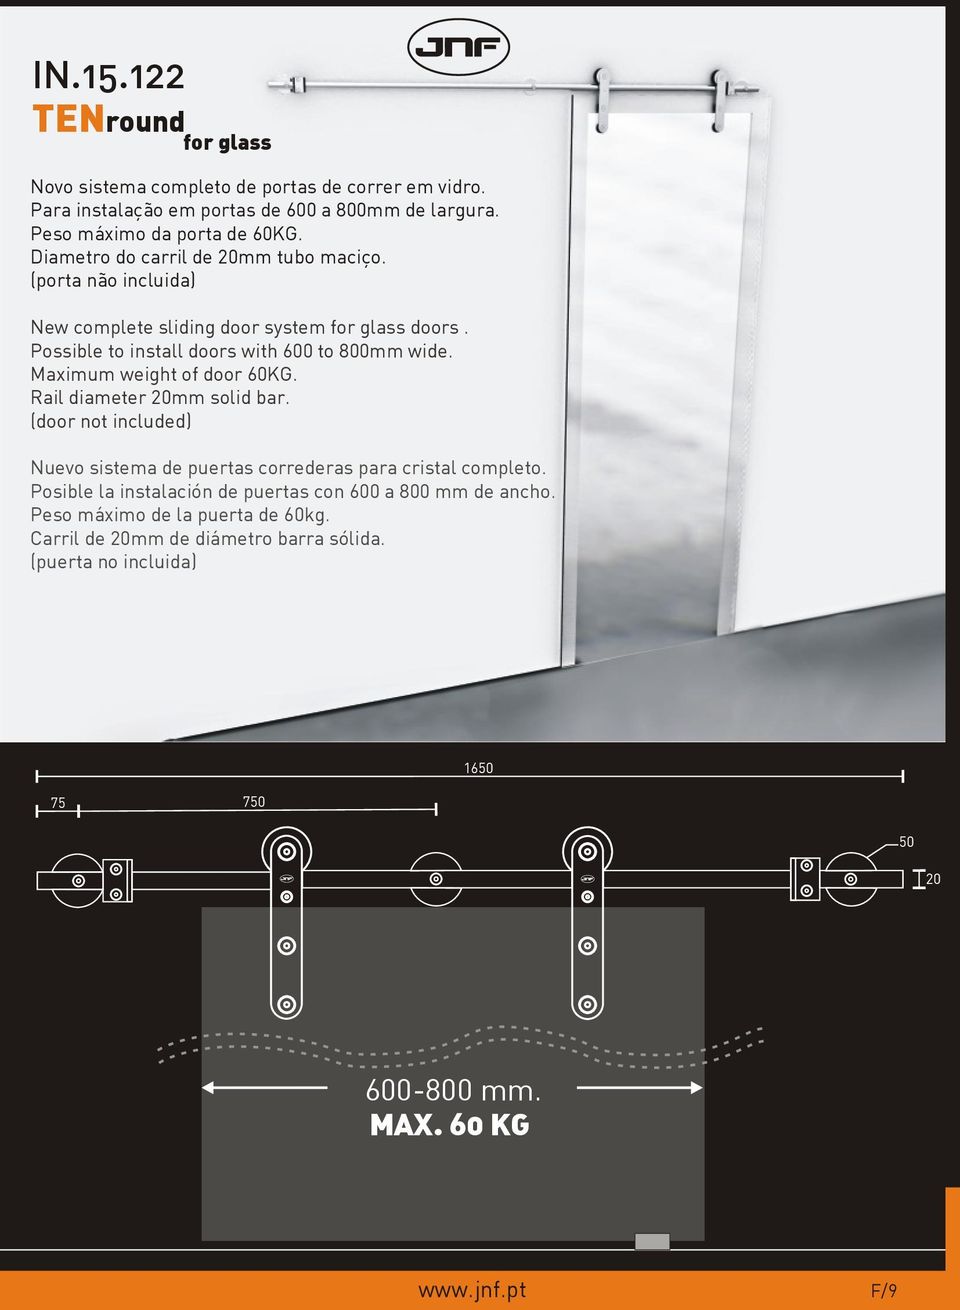 Maximum weight of door 60KG. Rail diameter 20mm solid bar. (door not included) Nuevo sistema de puertas correderas para cristal completo.